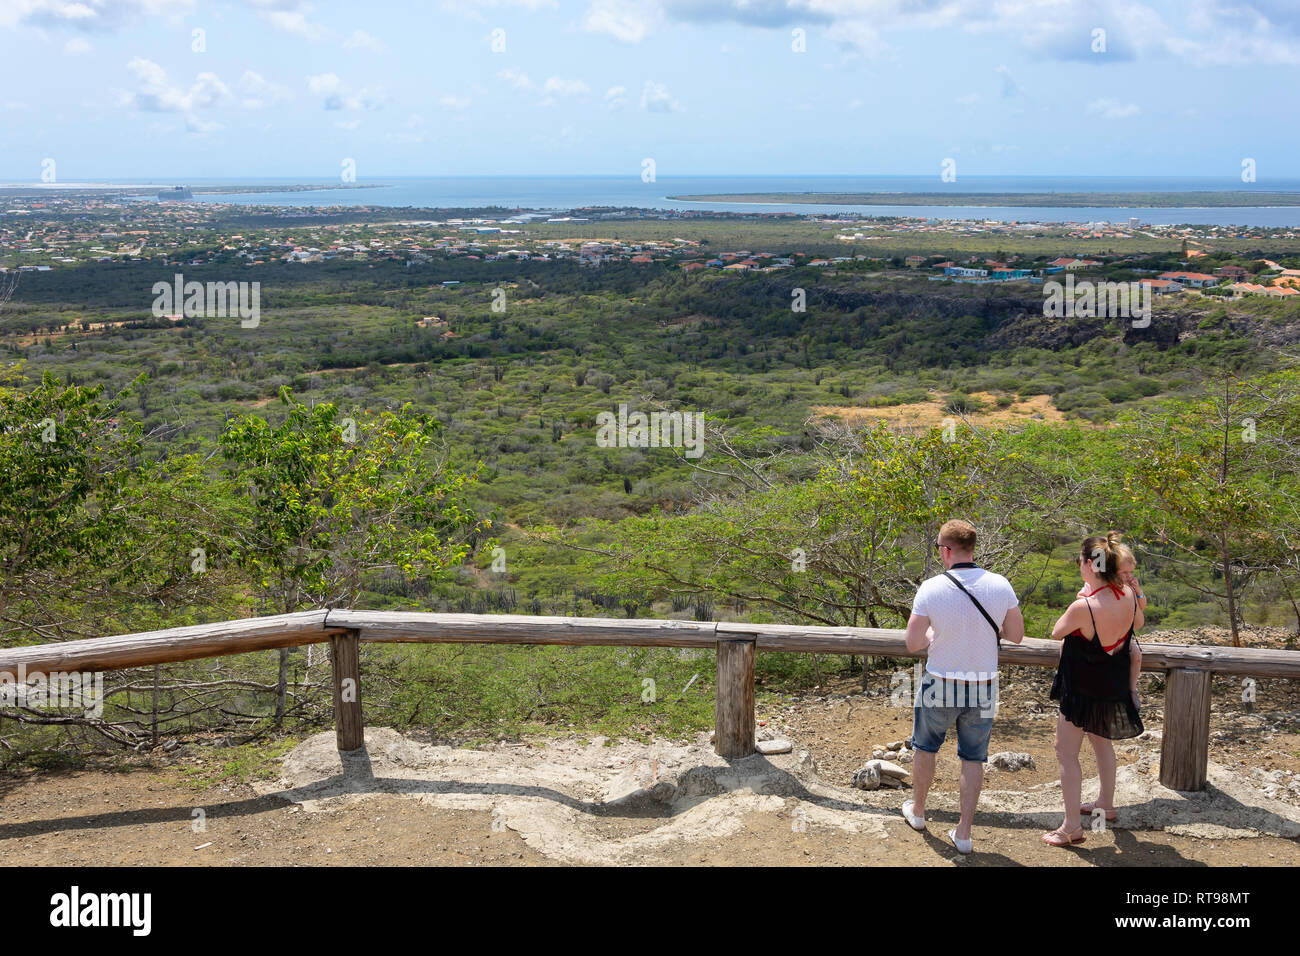 Costa occidentale vista dal Seru Largu lookout, Kralendijk, Bonaire, ABC isole Antille sottovento, dei Caraibi Foto Stock